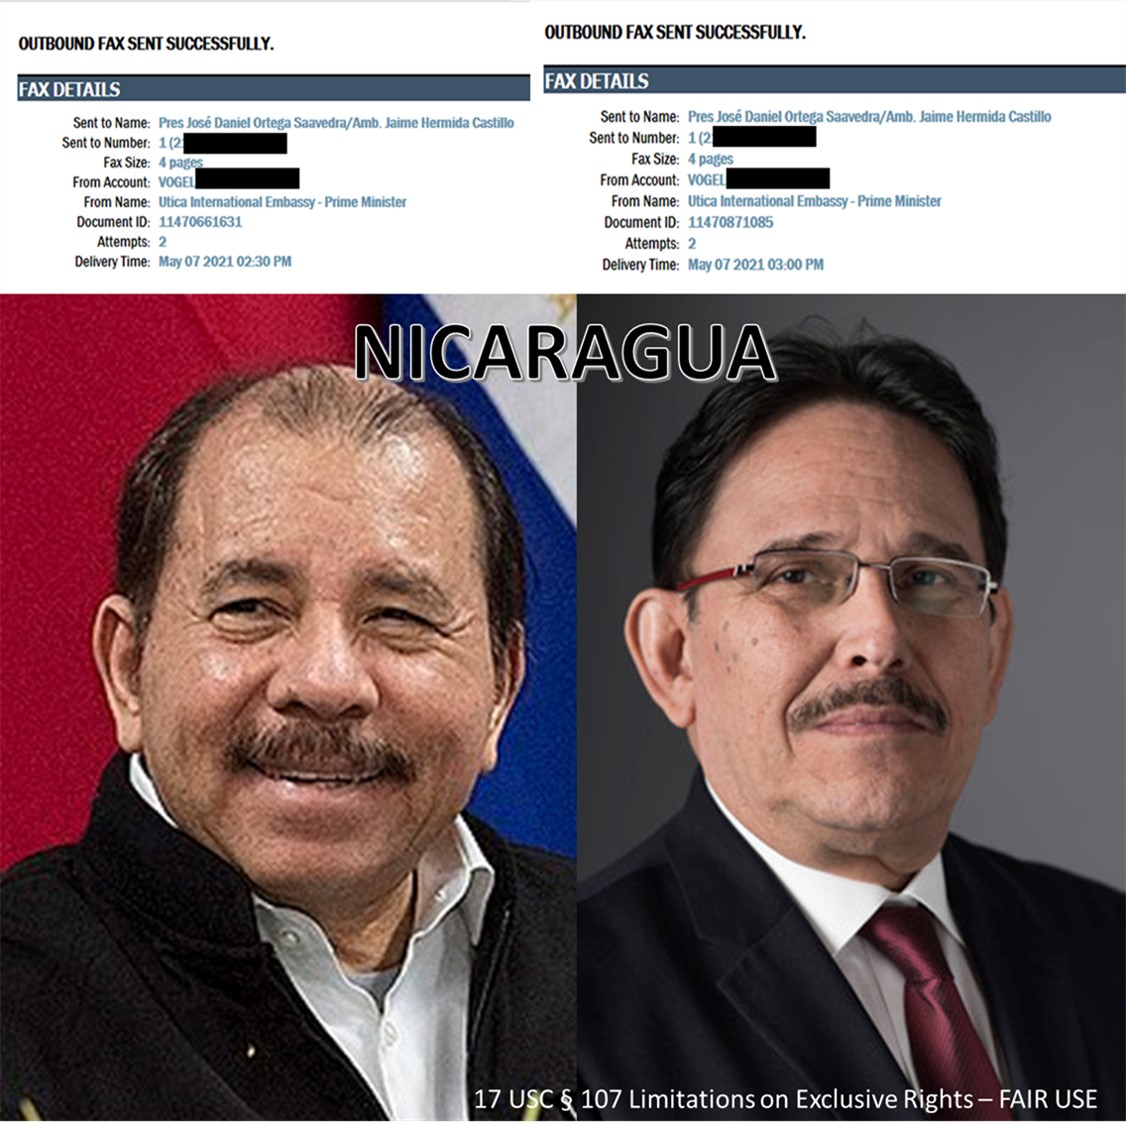 050721 Fax Confirmation Nicaragua